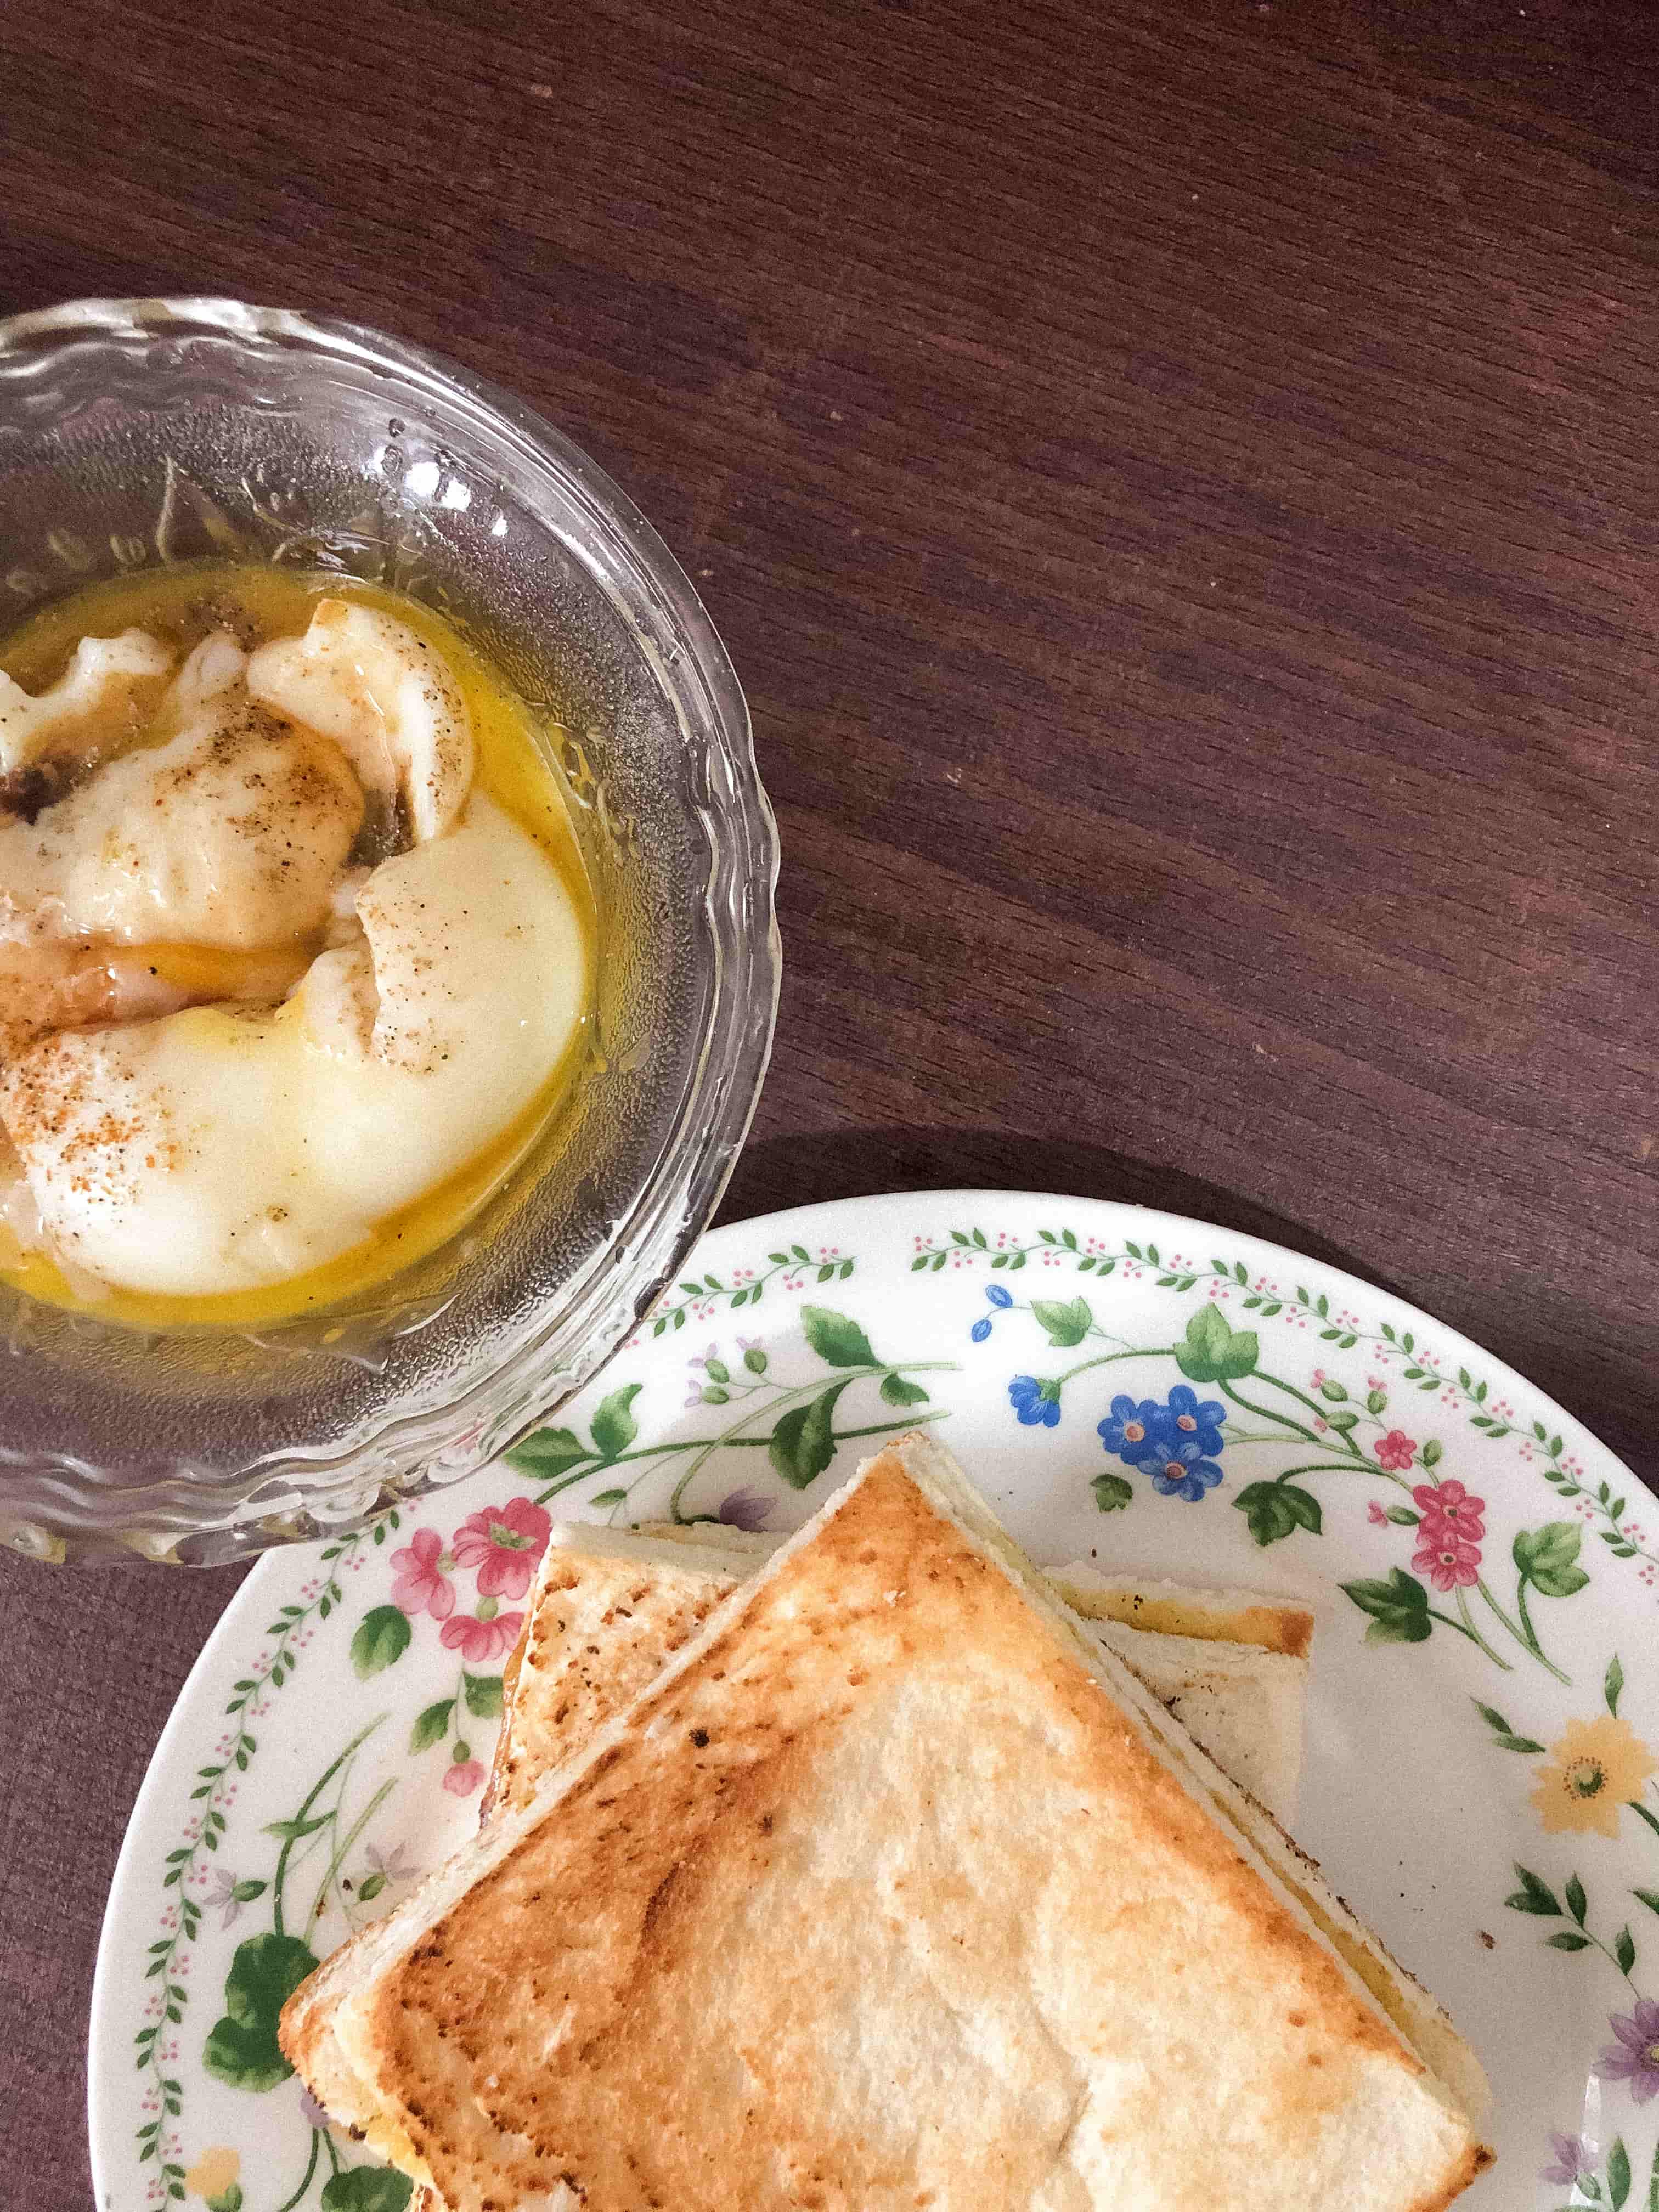 Kopitiam breakfast: kaya toast with half-boiled egg *chef's kiss*